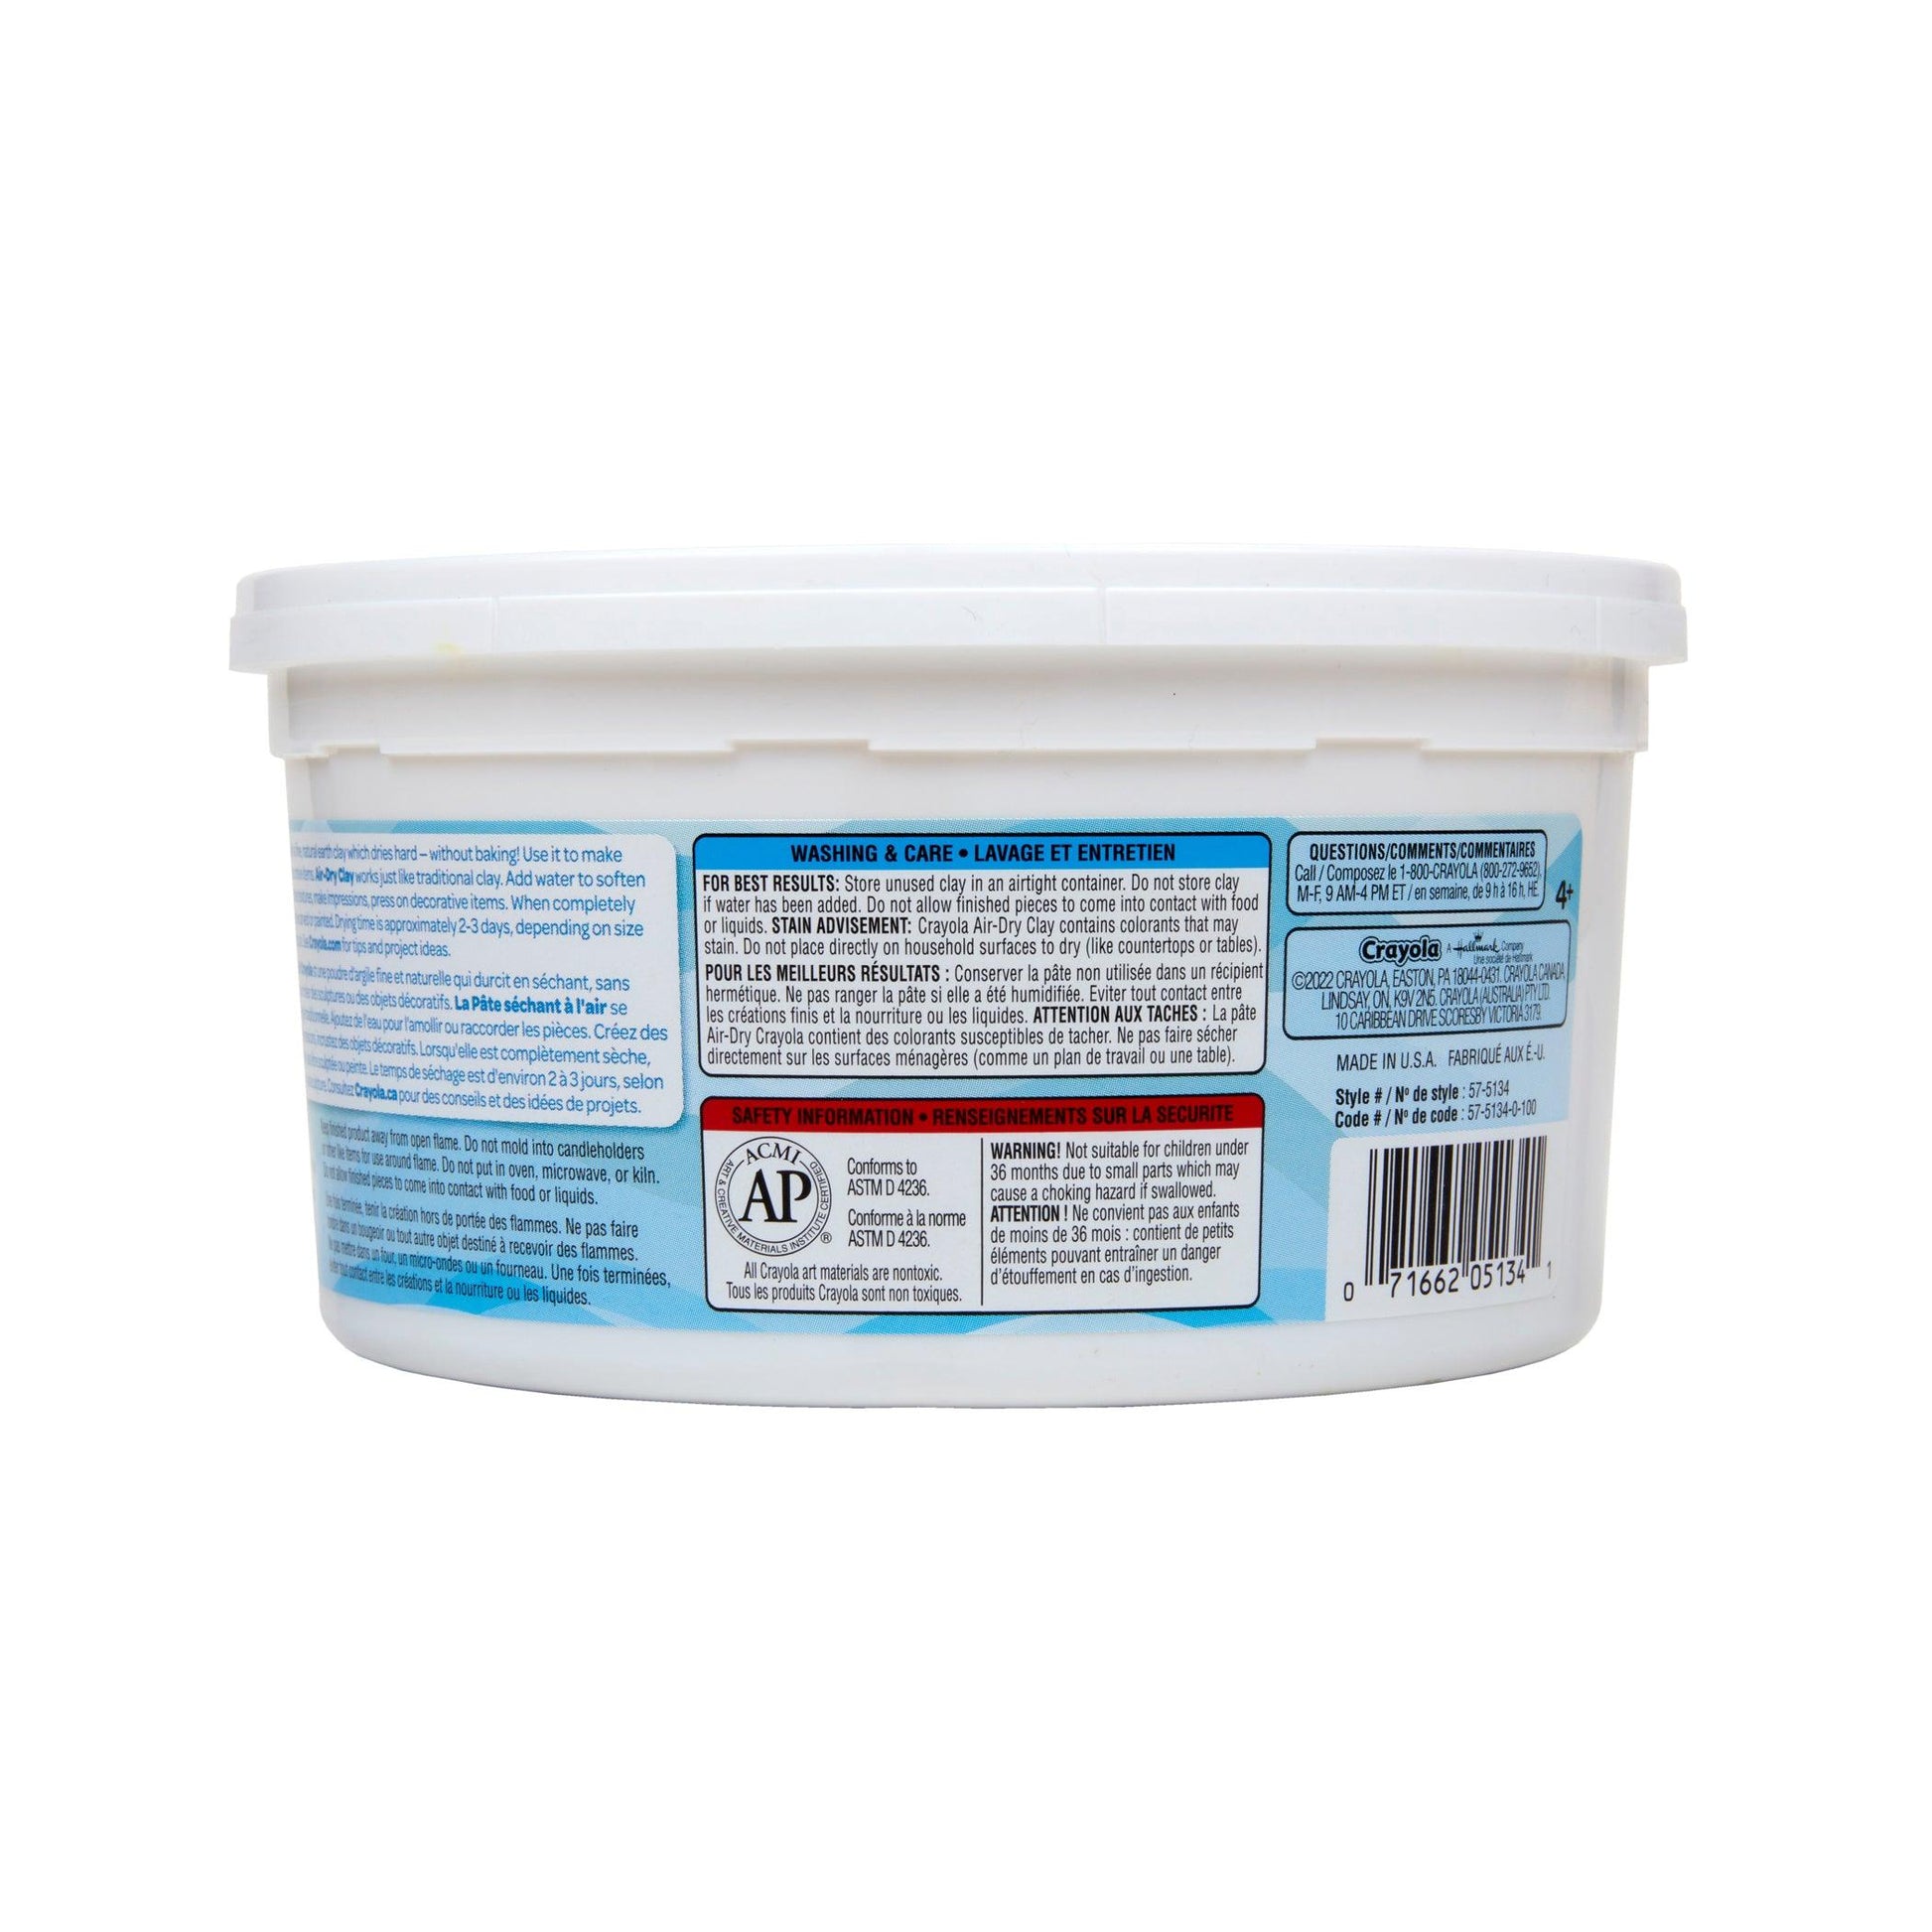 Air Dry Clay, 2.5lb Tub, Yellow, Pack of 4 - Loomini